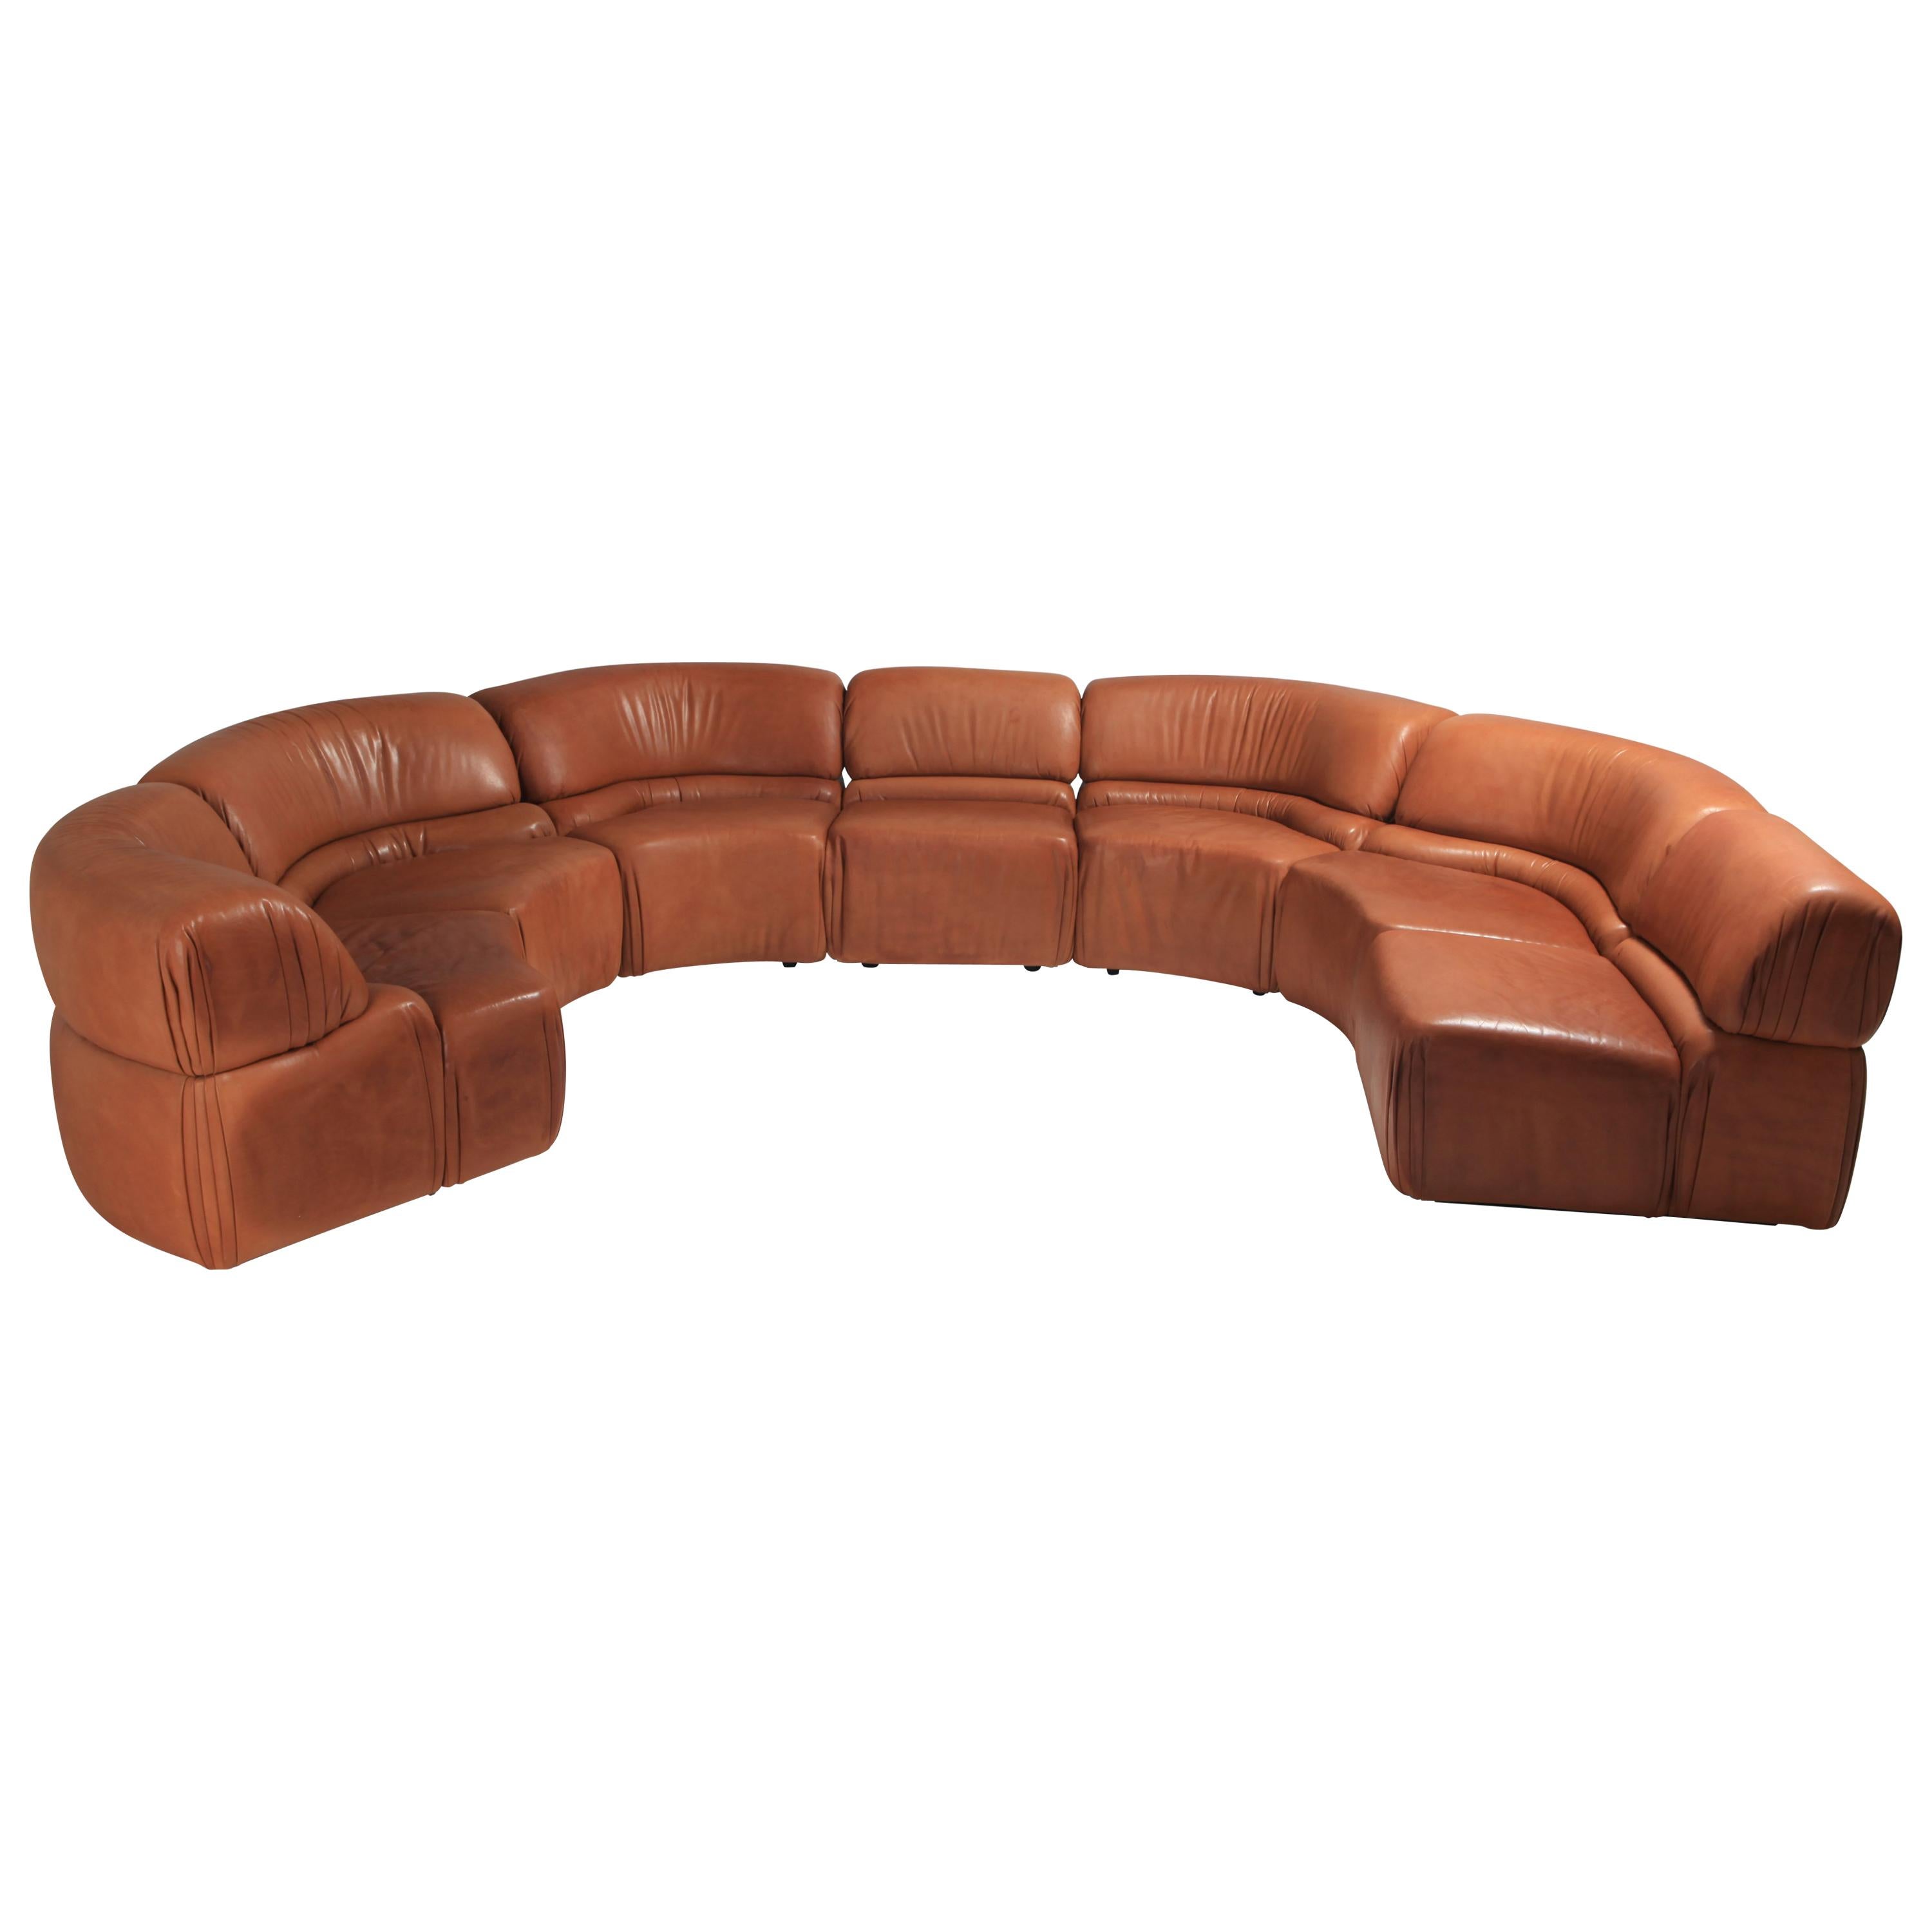 Sectional Cognac Leather Sofa 'Cosmos' by De Sede, Switzerland